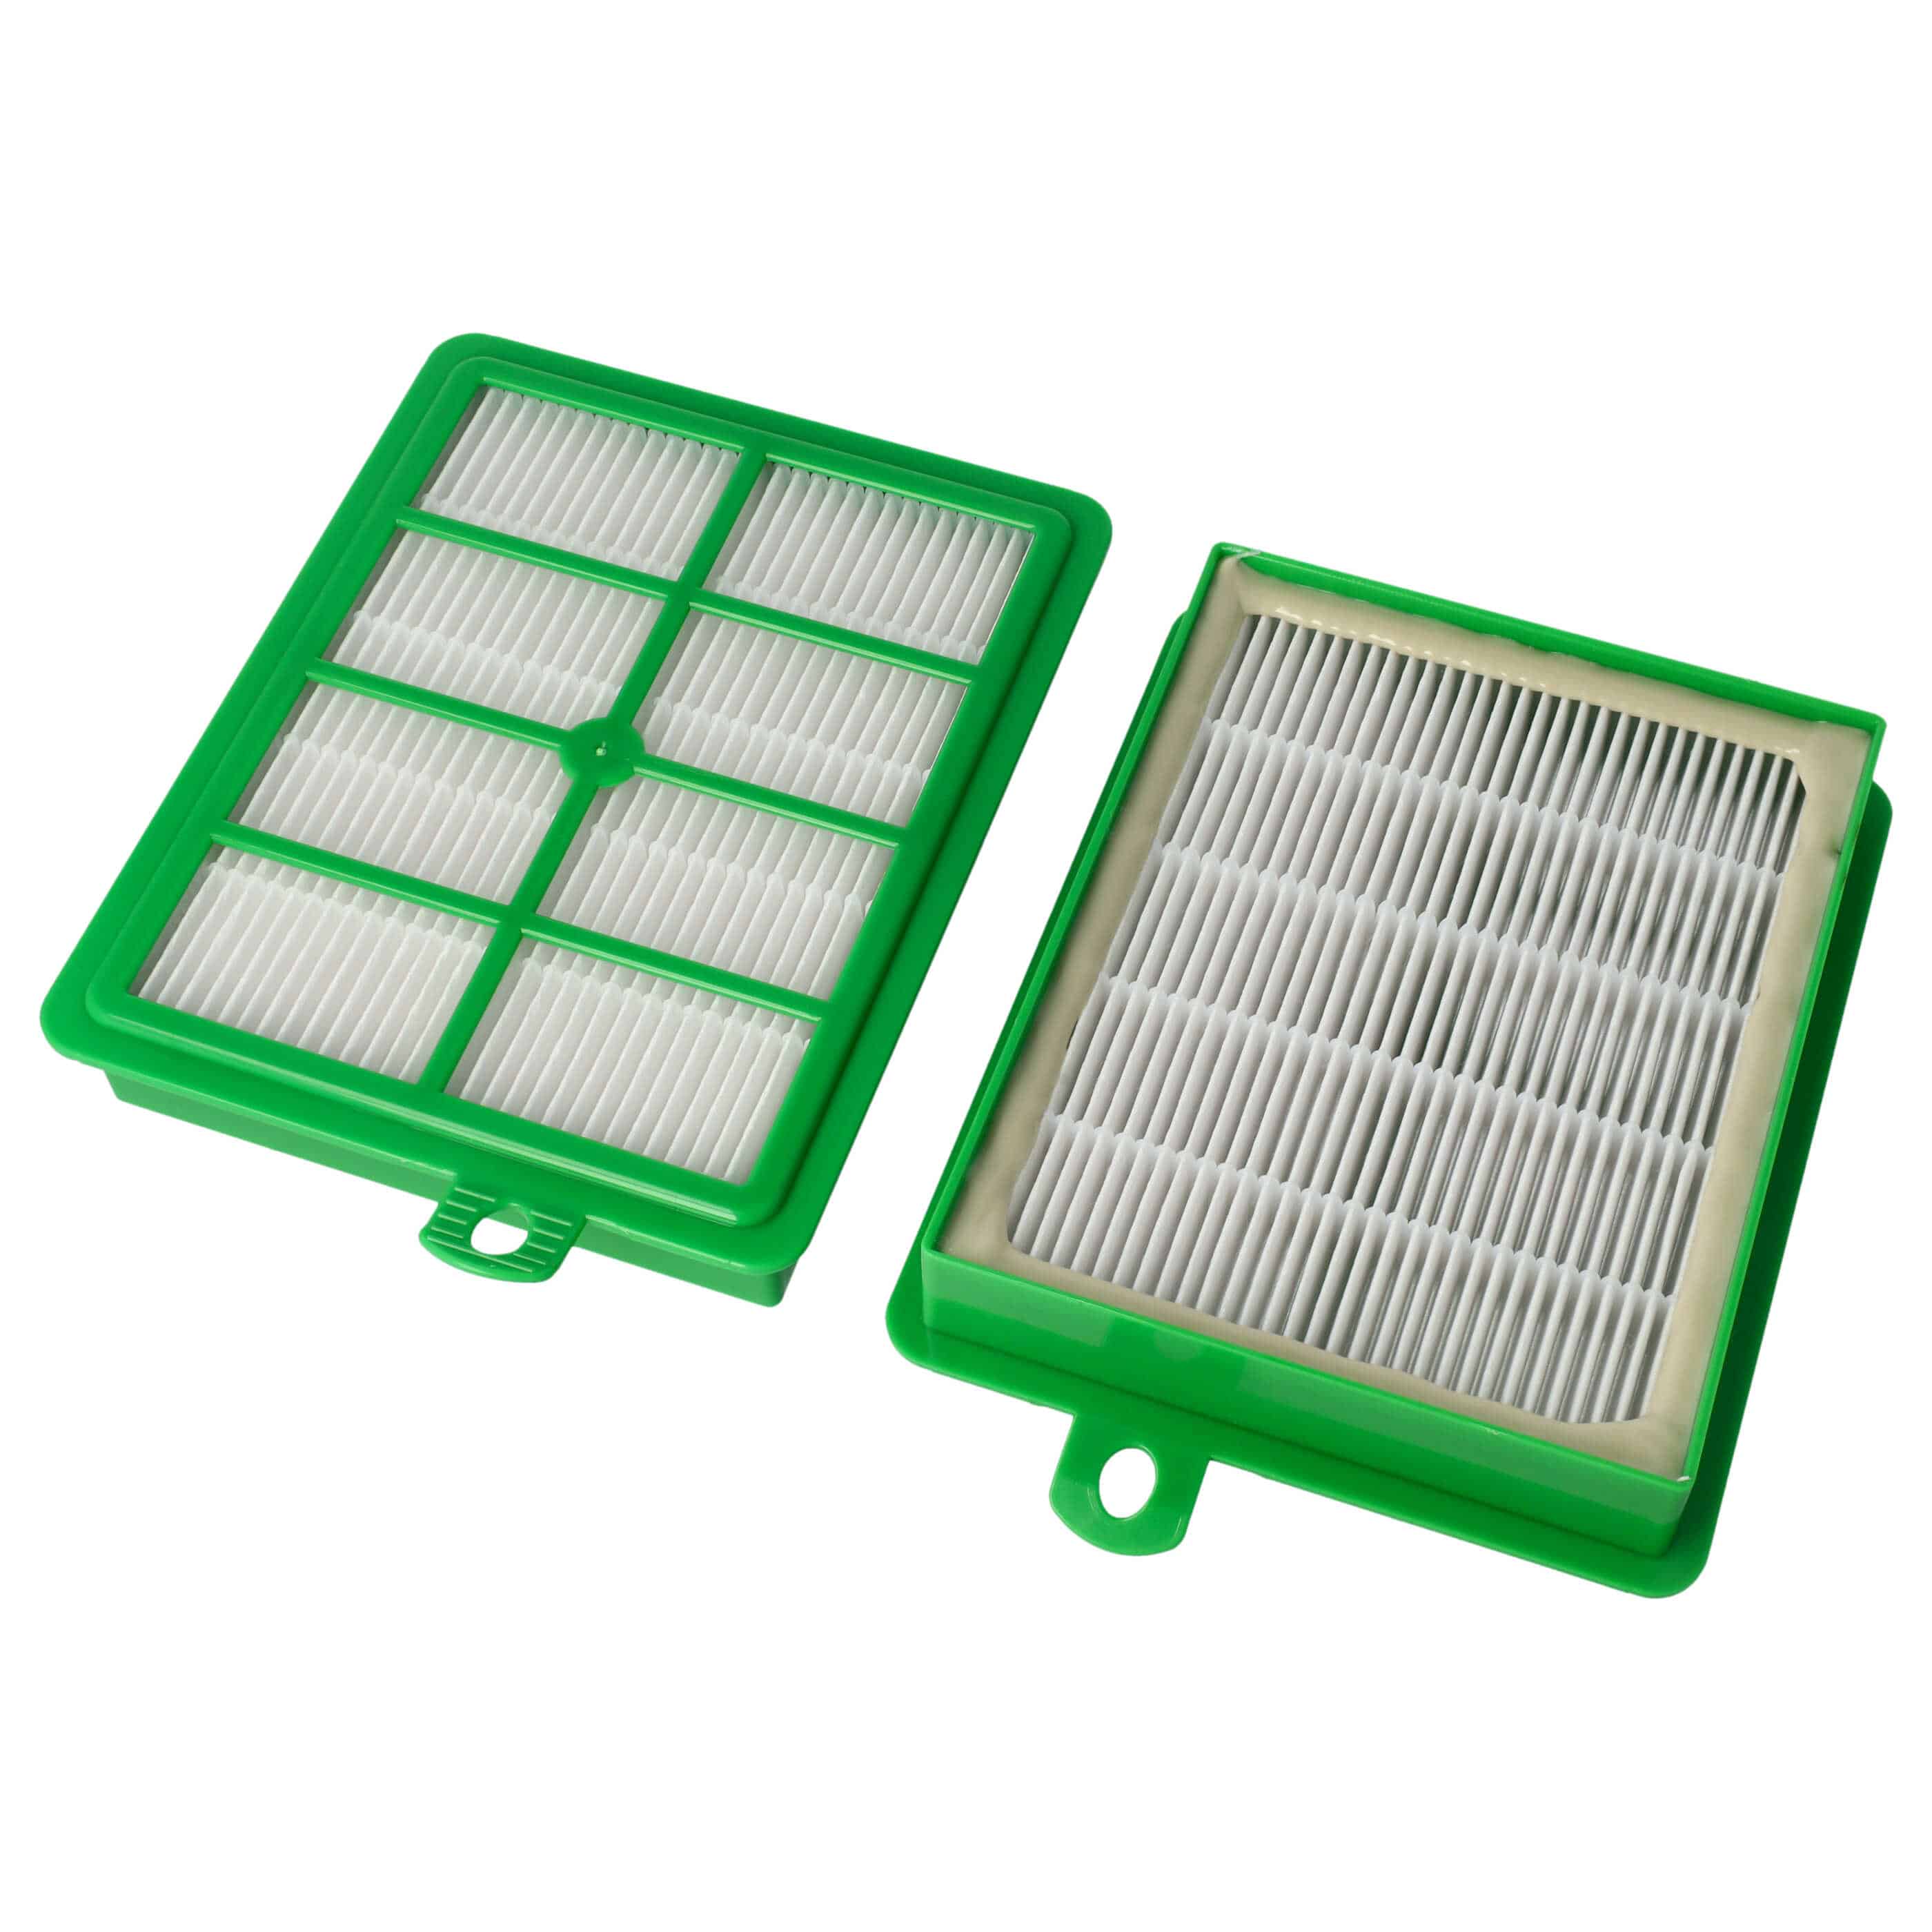 2x Filtro reemplaza AEG ASF1W, AFS1, E 12, AFS1W, AEFG12W para aspiradora - filtro Hepa blanco / verde